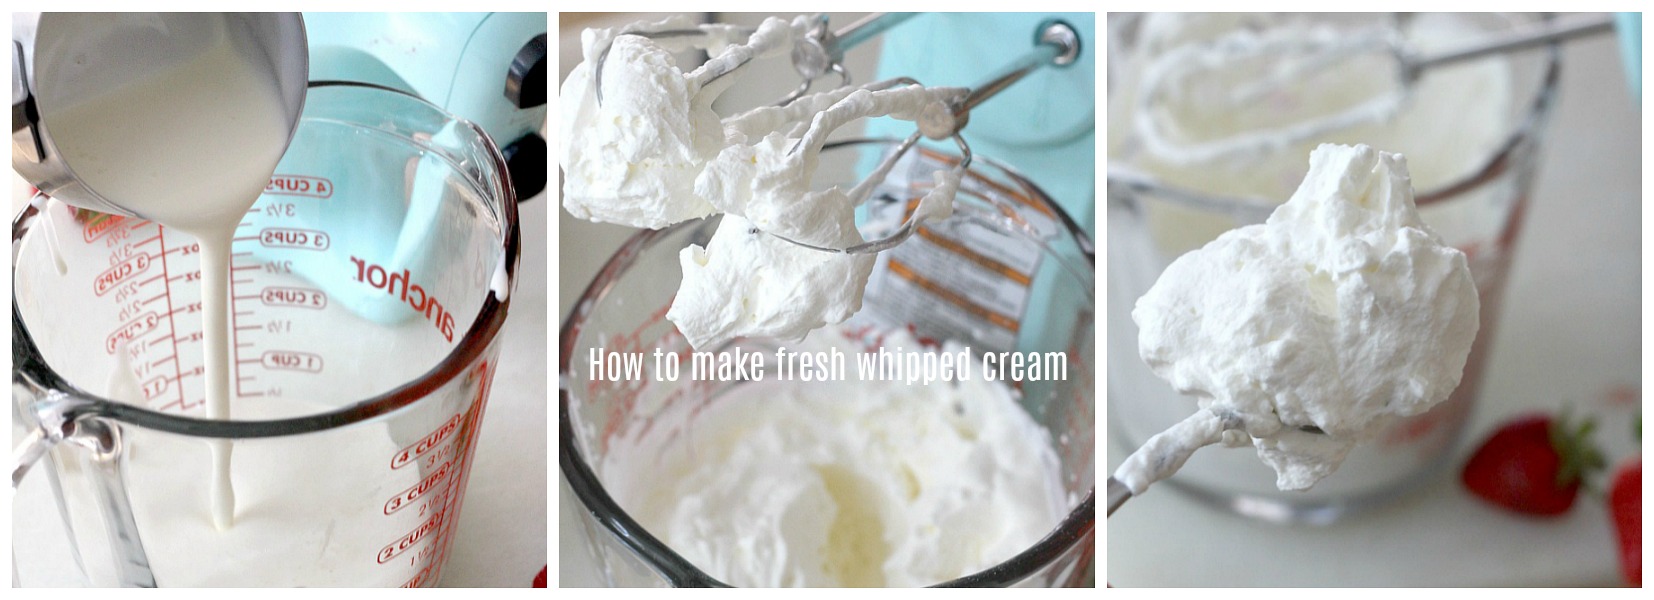 How to make fresh whipped cream for Strawberry Shortcake